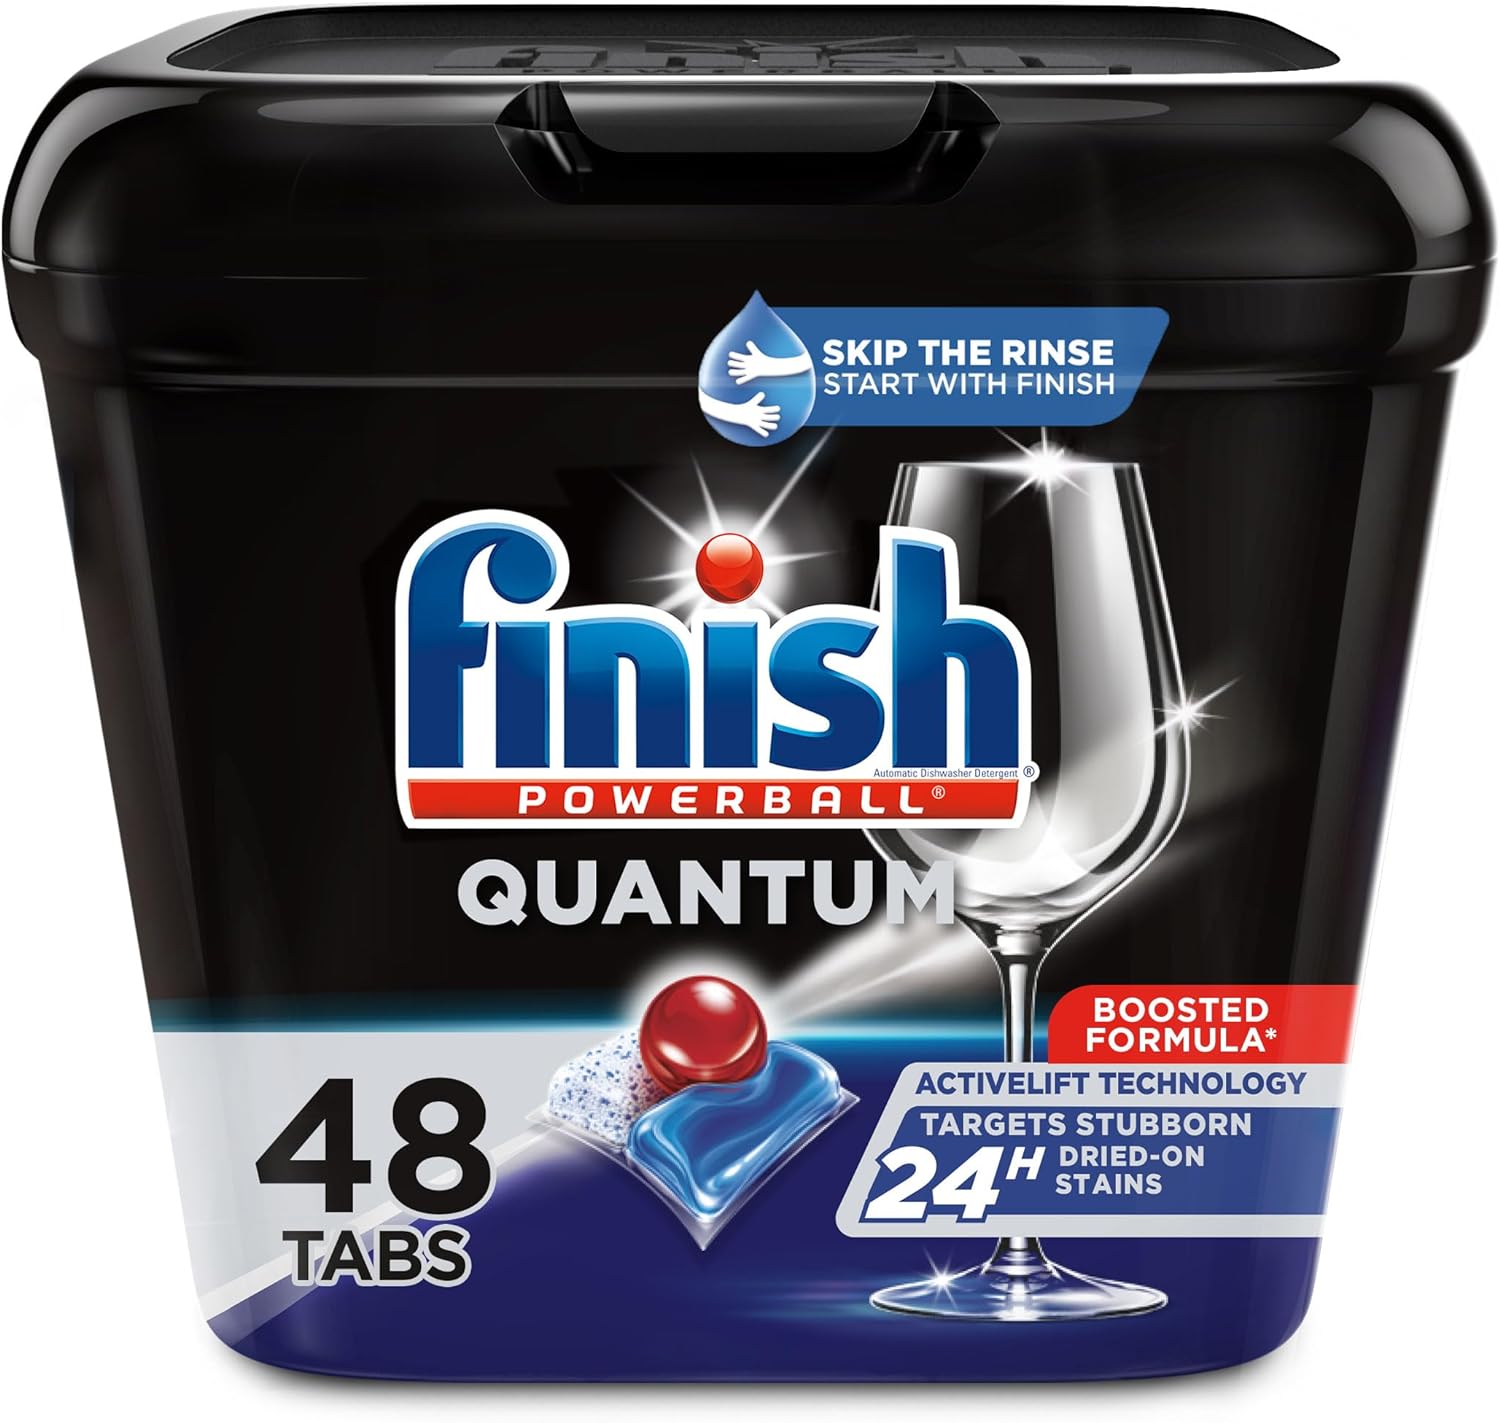 FINISH Quantum Powerball, Dishwasher Pods, Dishwasher Detergent Liquid, Dishwasher Soap, Advanced Clean & Shine, 48ct Dishwasher Tablets